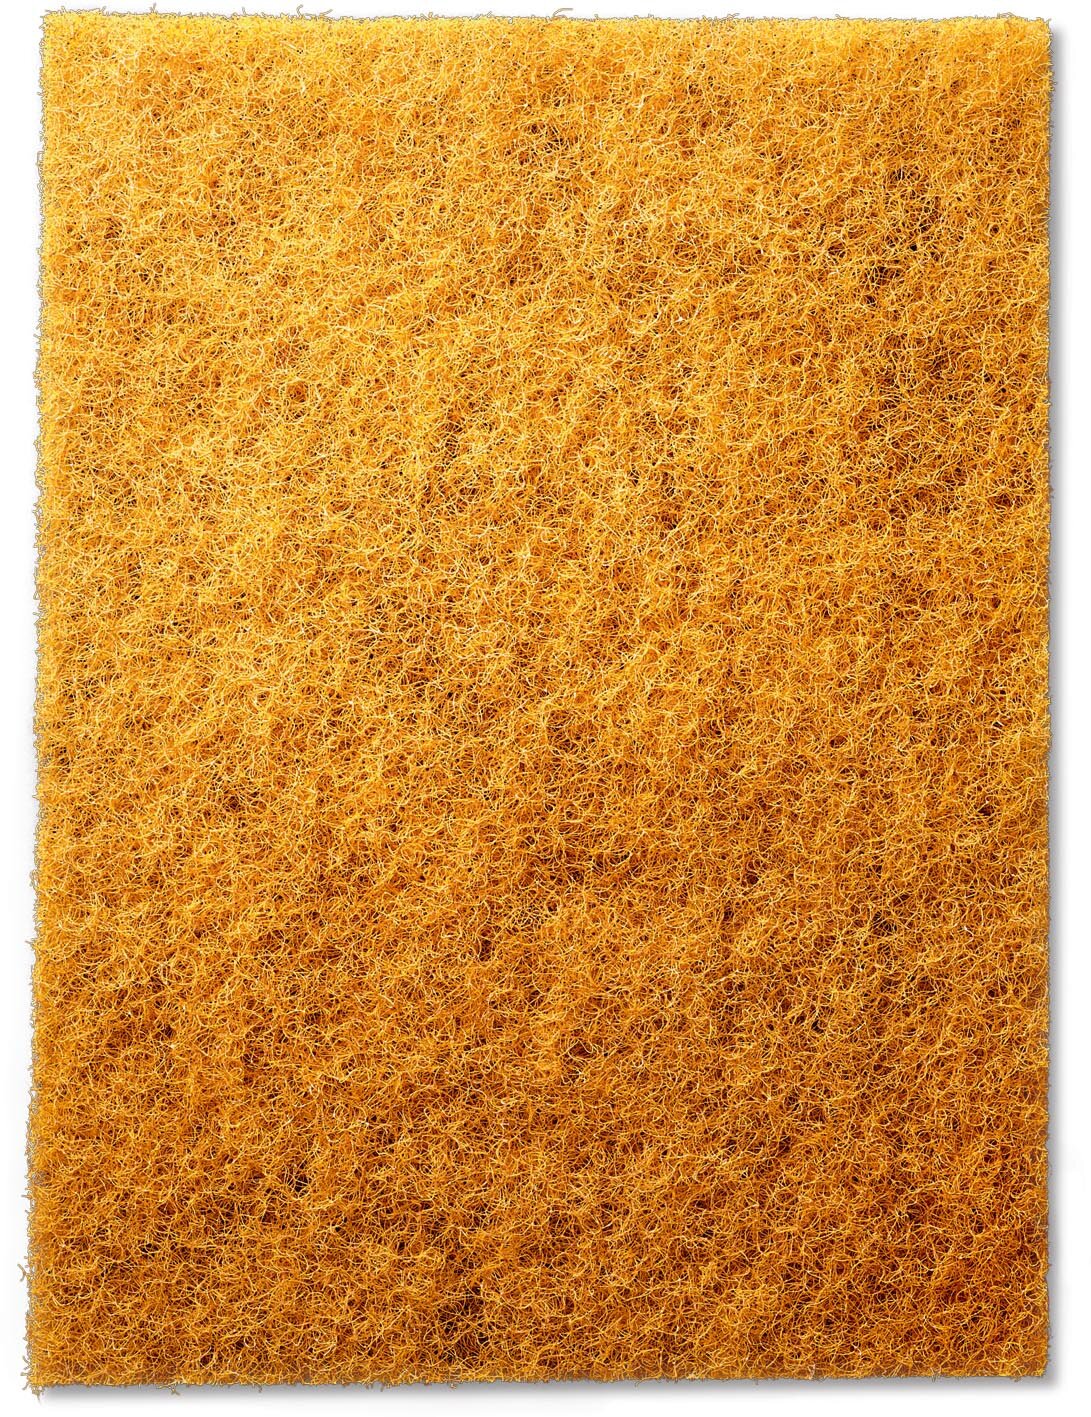 siavlies tamponi manuali strisce abrasive oro microfine (20 pezzi)